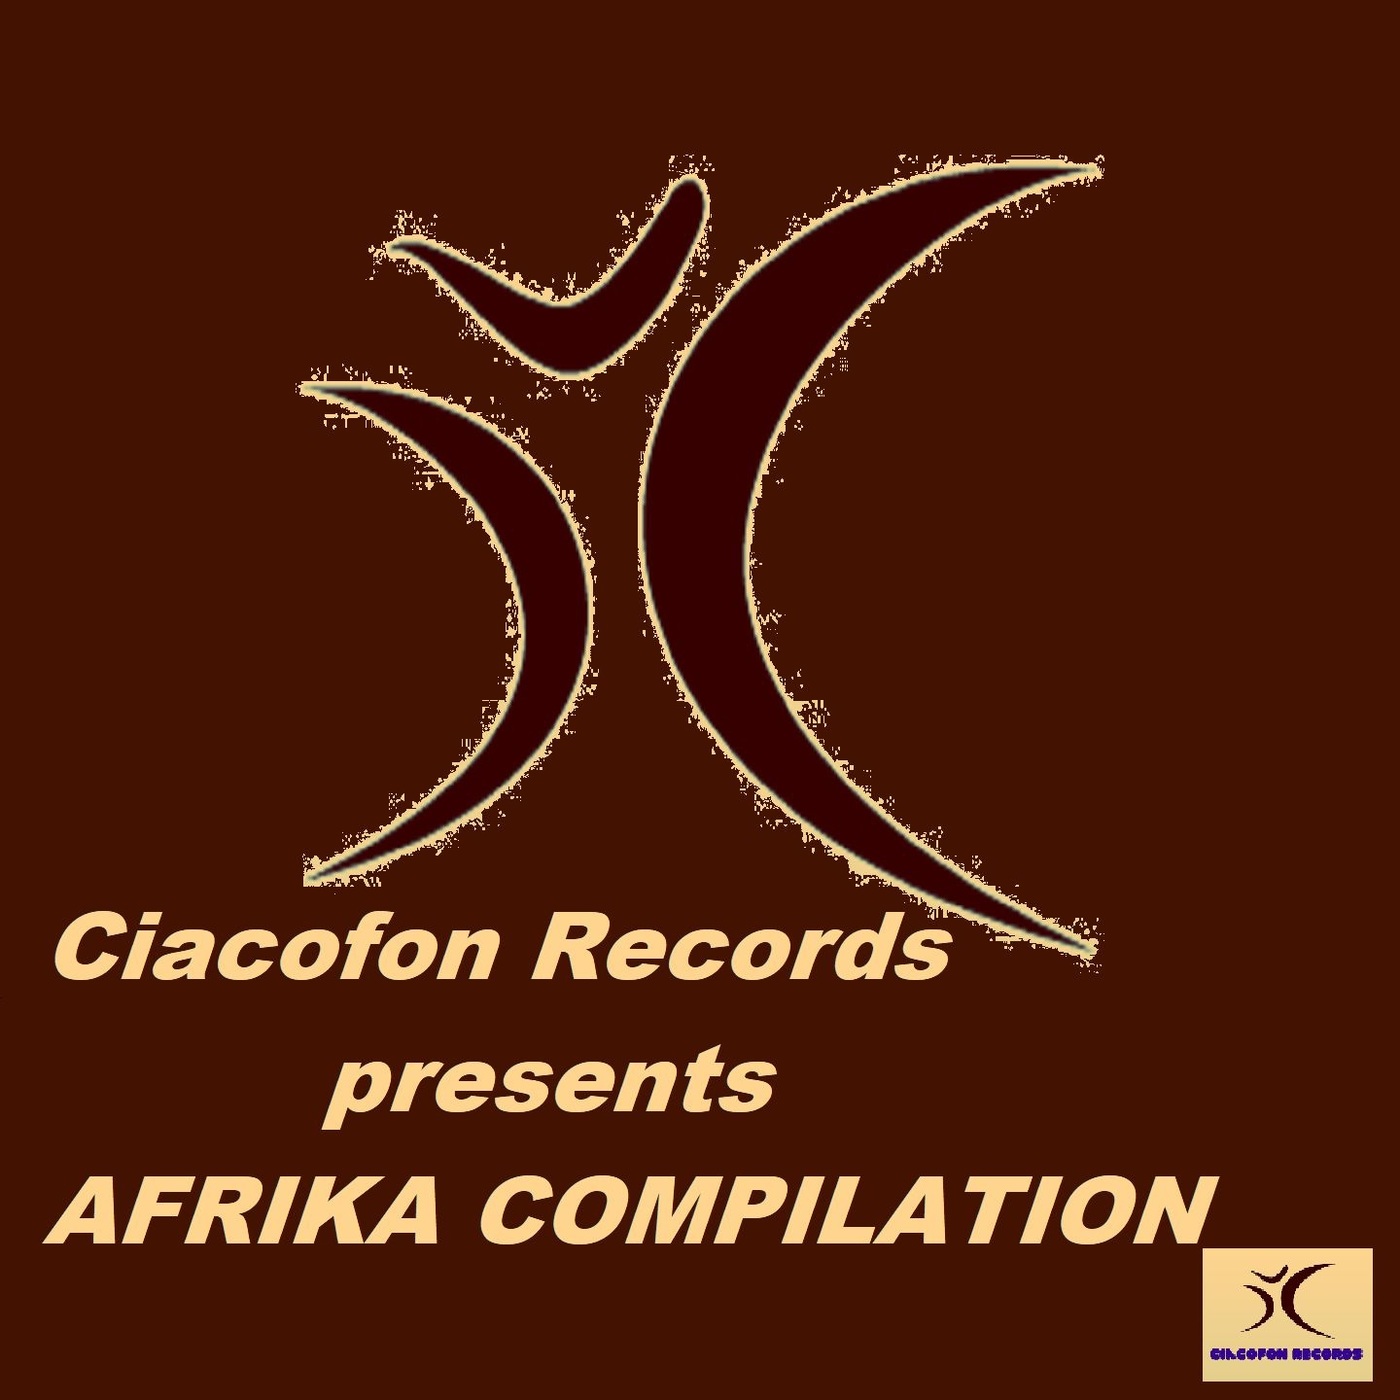 VA - AFRIKA COMPILATION / Ciacofon Records